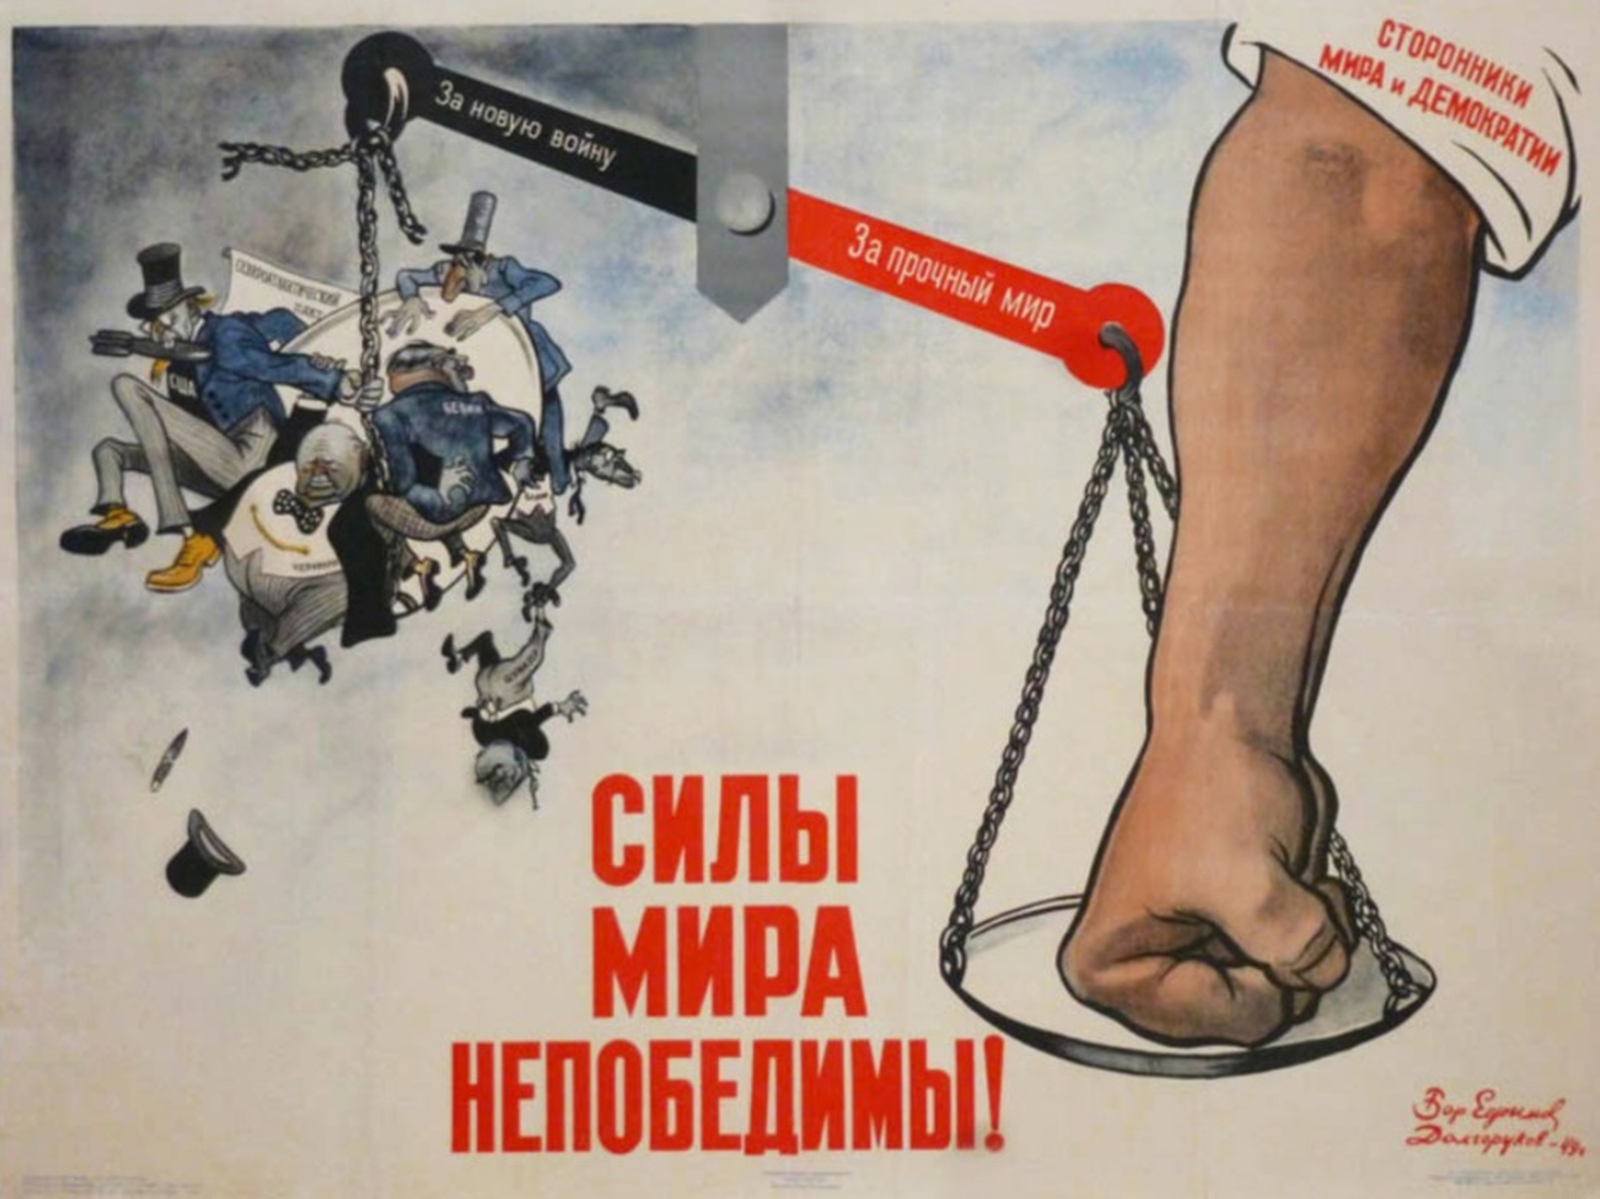 Рисунок иллюстрация к лозунгу. Советские плакаты. Советская агитация плакаты. Советские пропагандистские плакаты. Советские социальные плакаты.